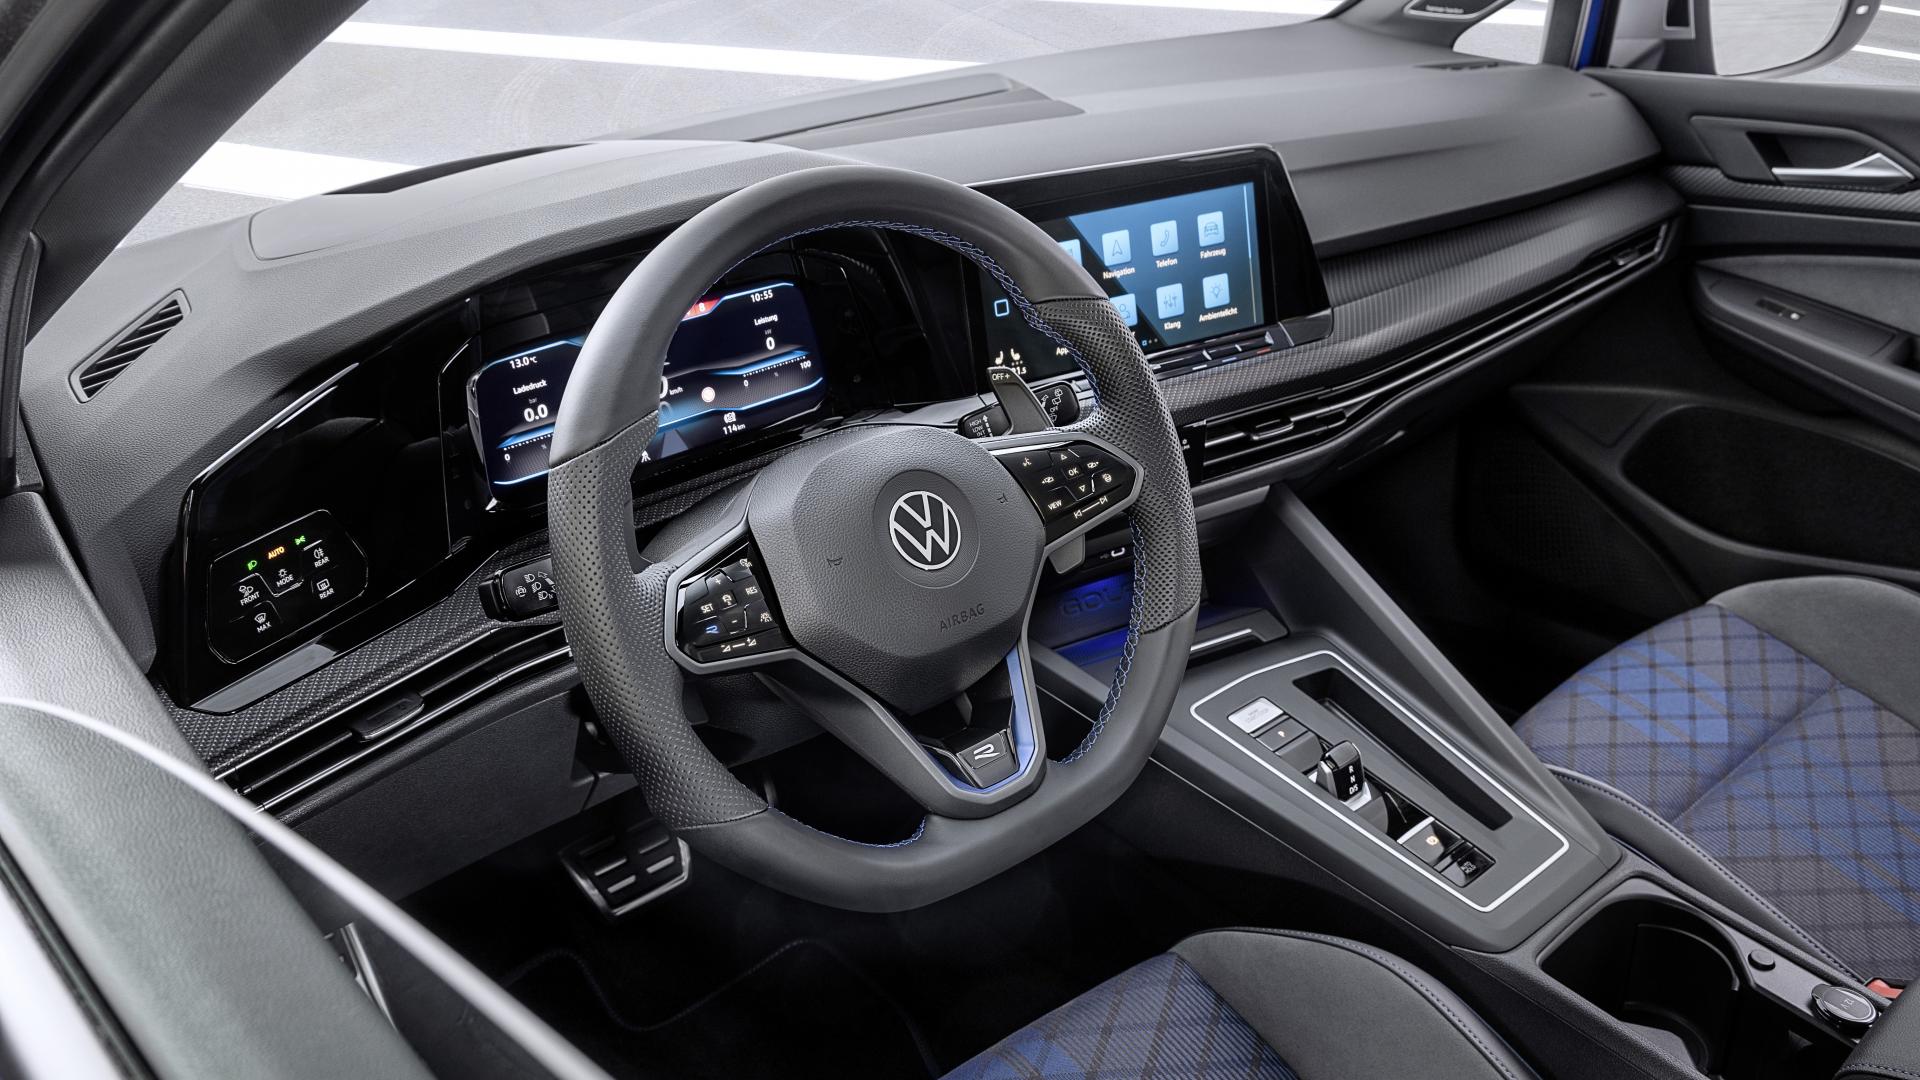 TopGear | Behold the new Volkswagen Golf R Estate